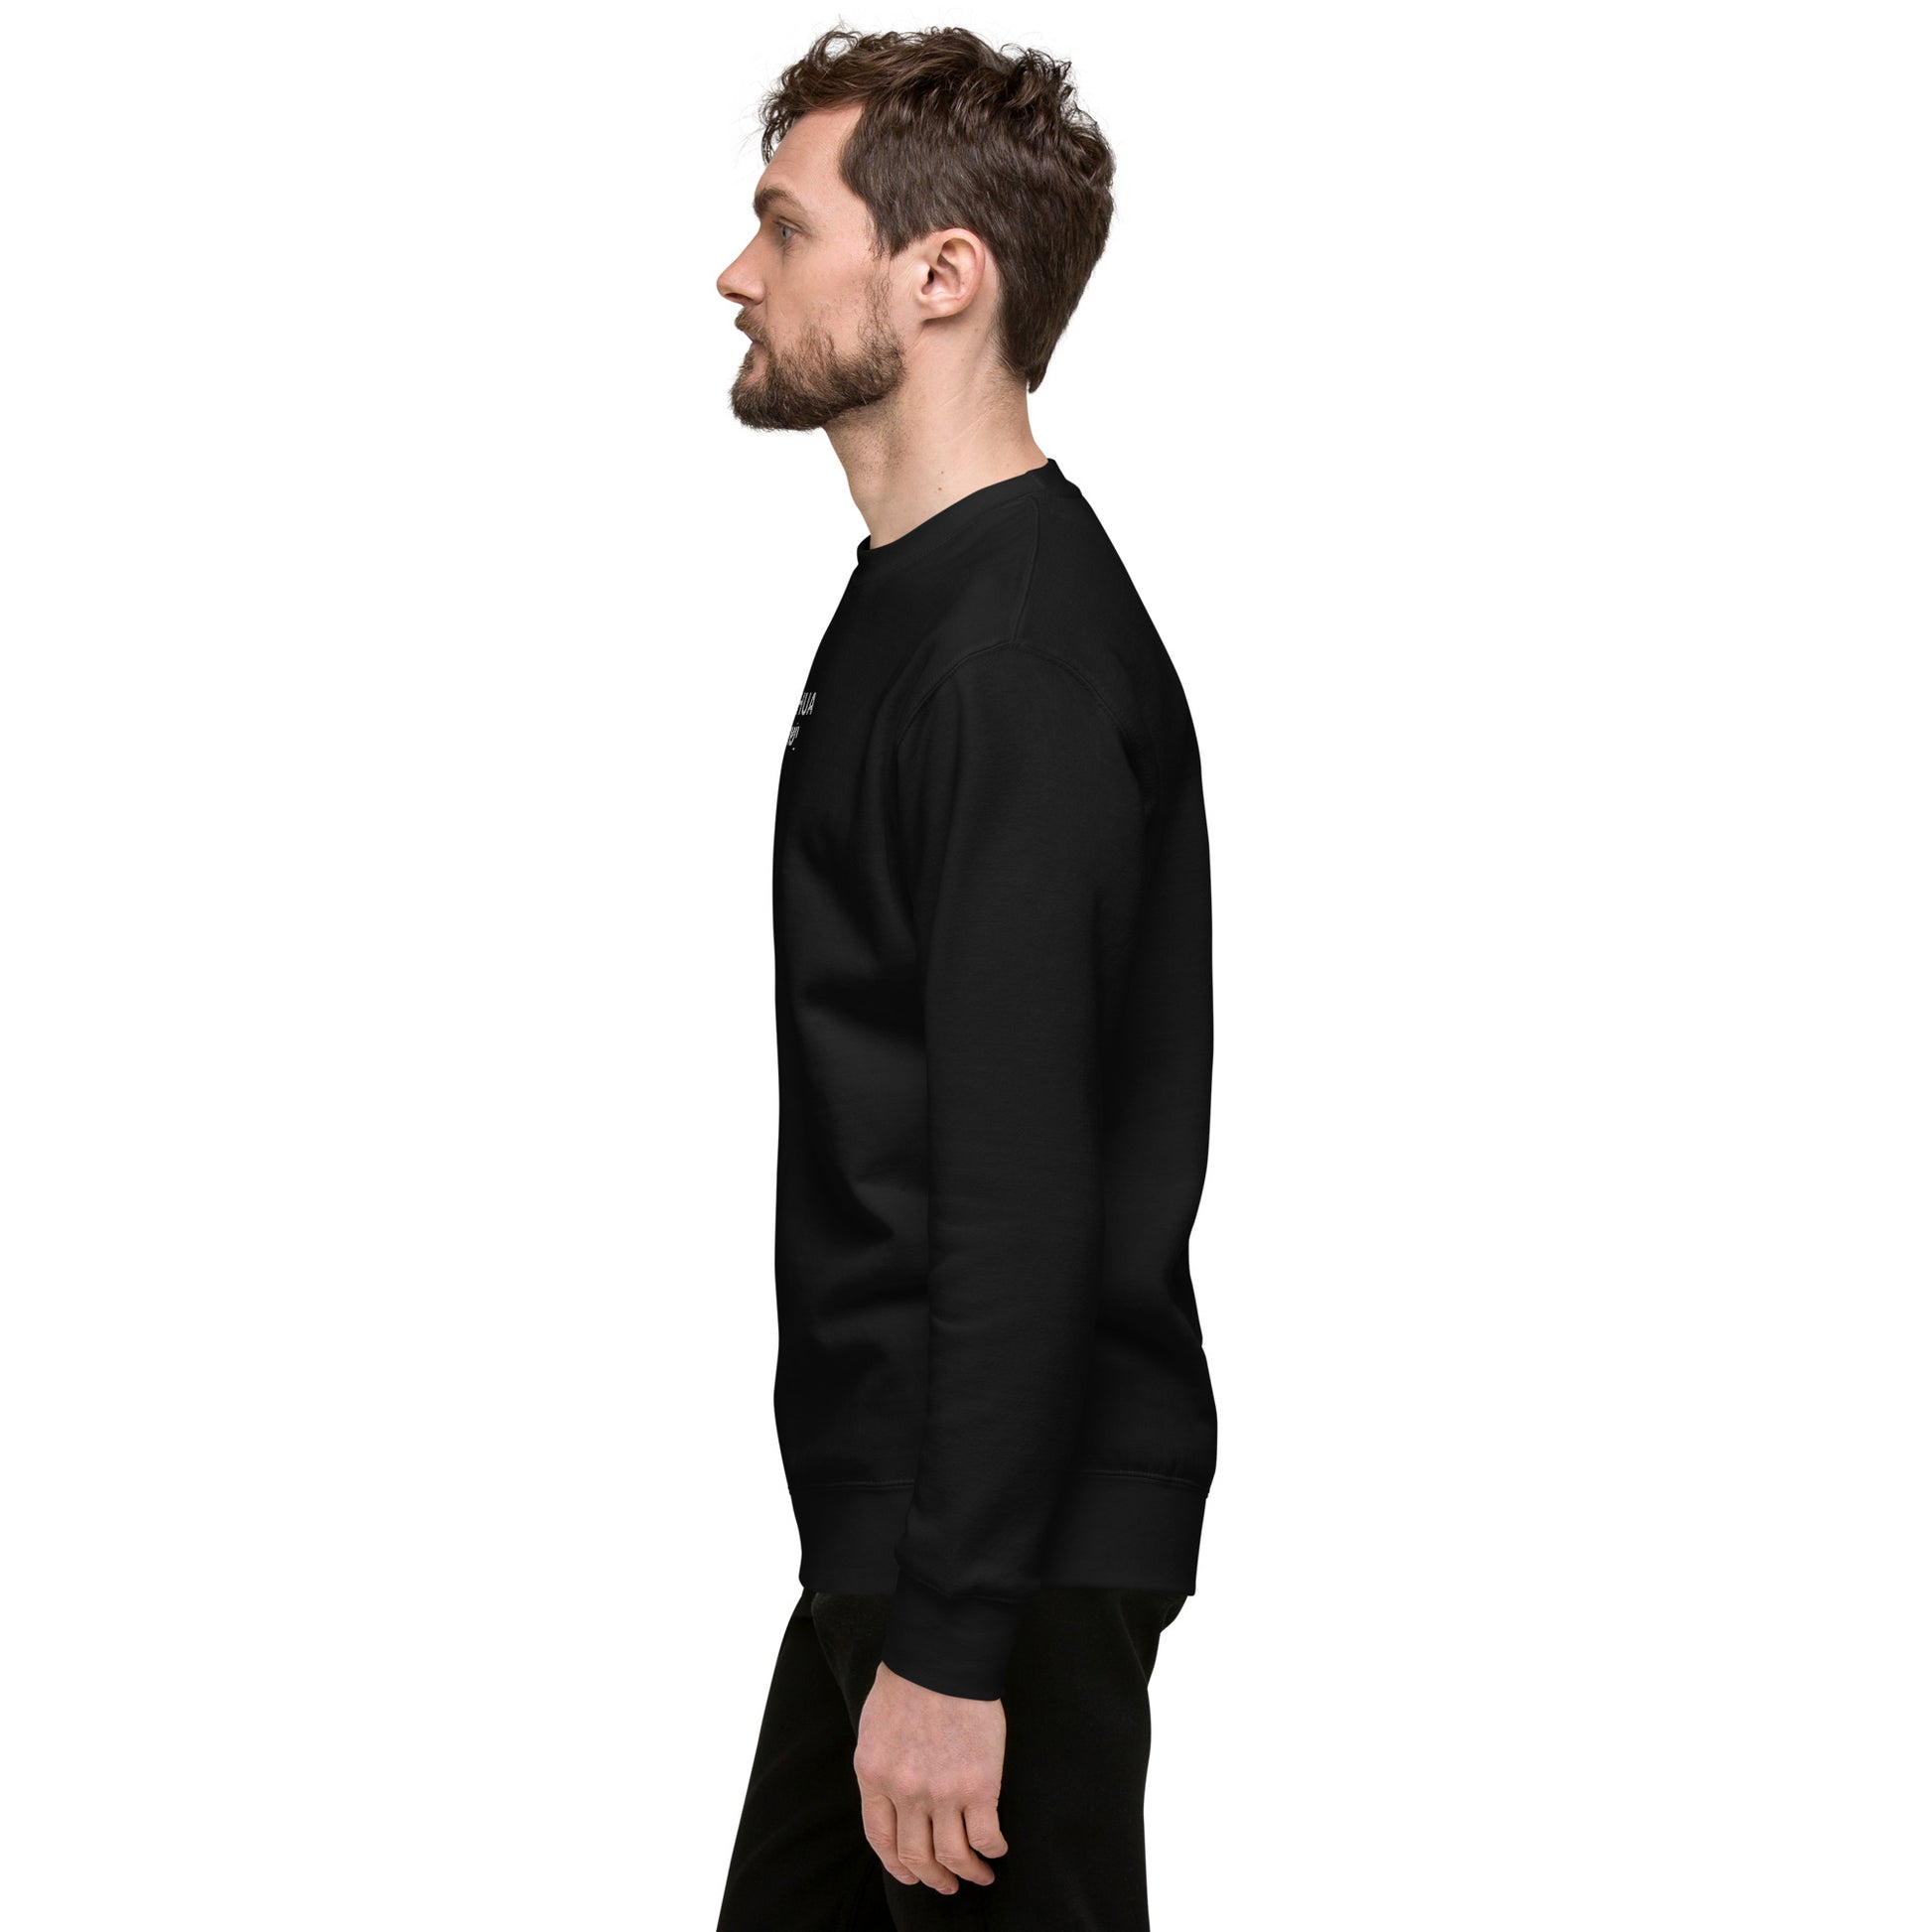 Men's Premium Embroidered "Yeshua" Sweatshirt - Humble & Faithful Co.